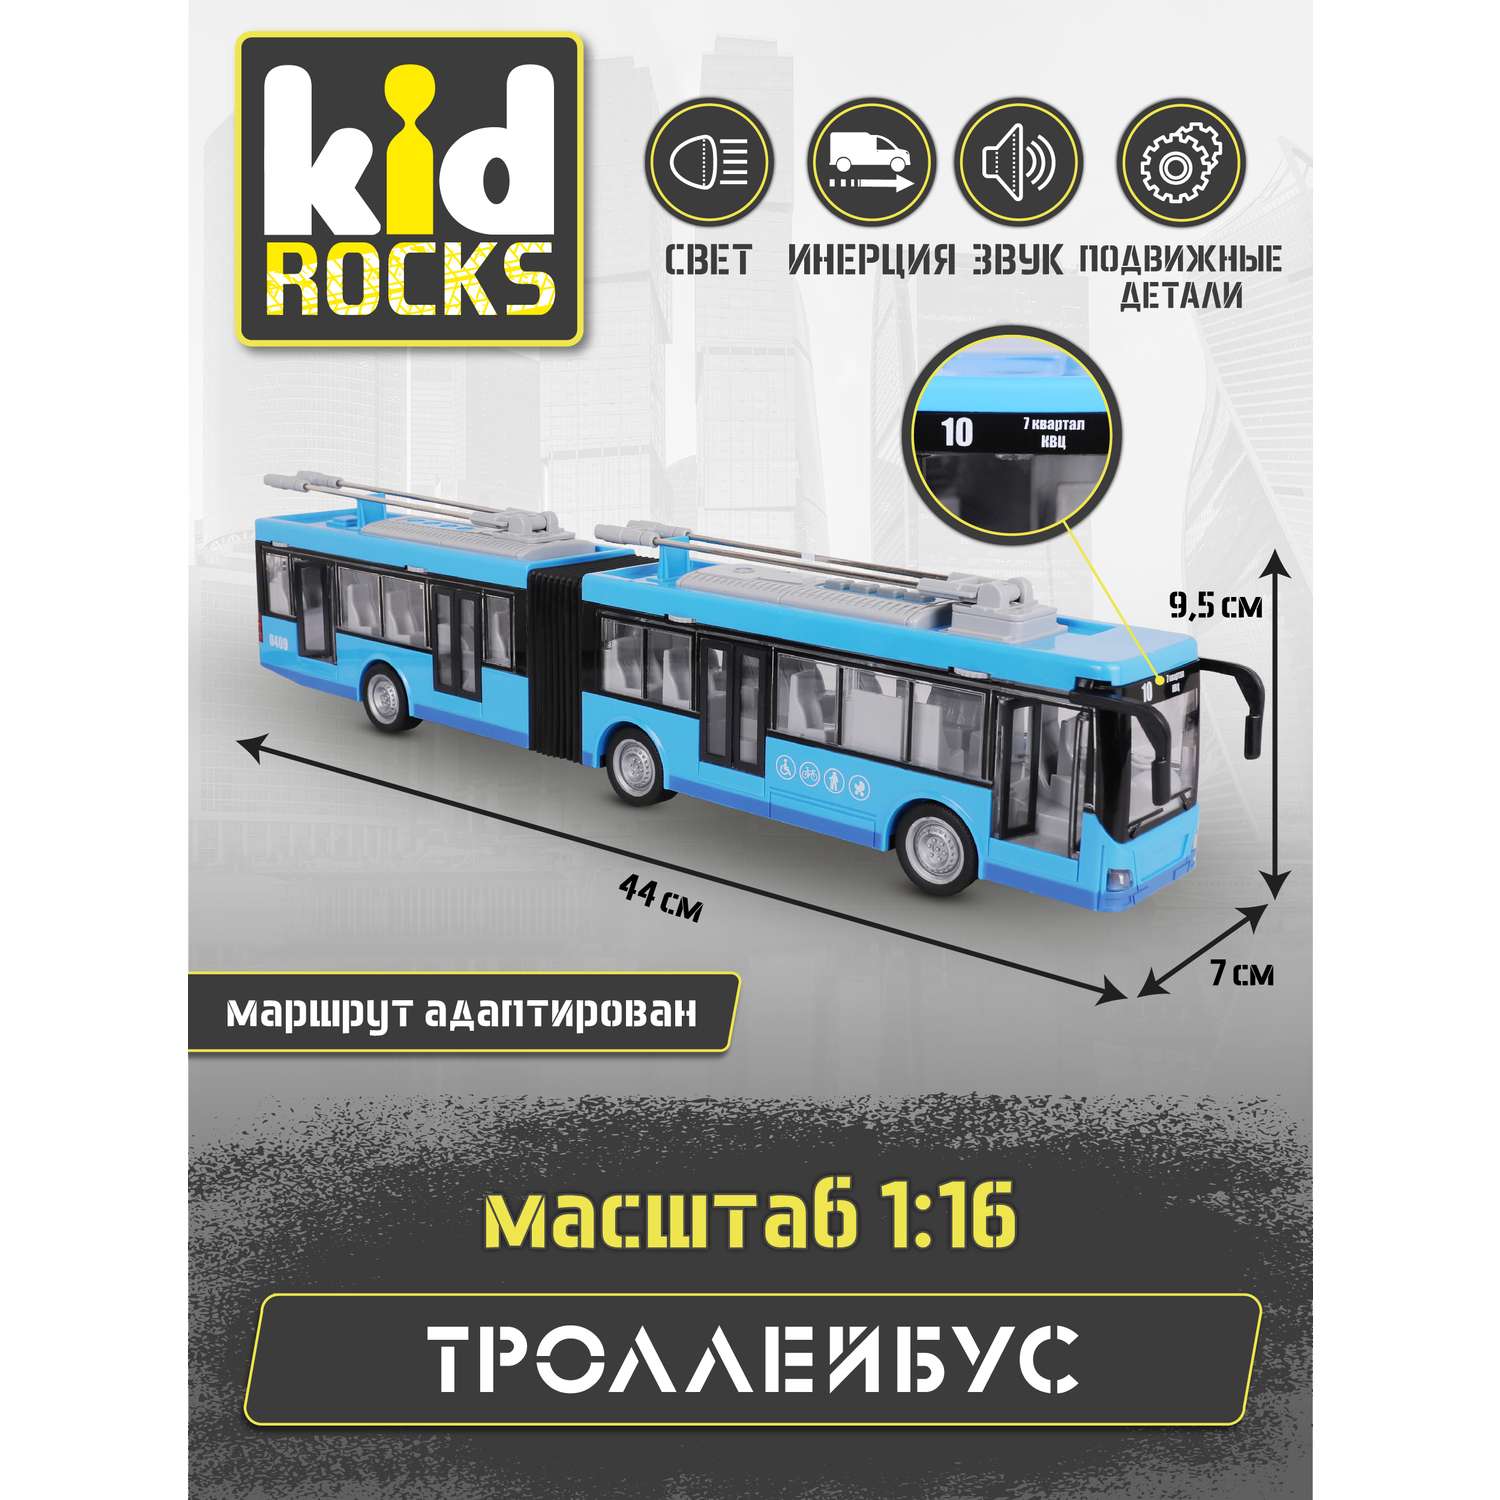 Модель Kid Rocks Троллейбус гармошка 1:16 со звуком и светом YK-2102 - фото 5